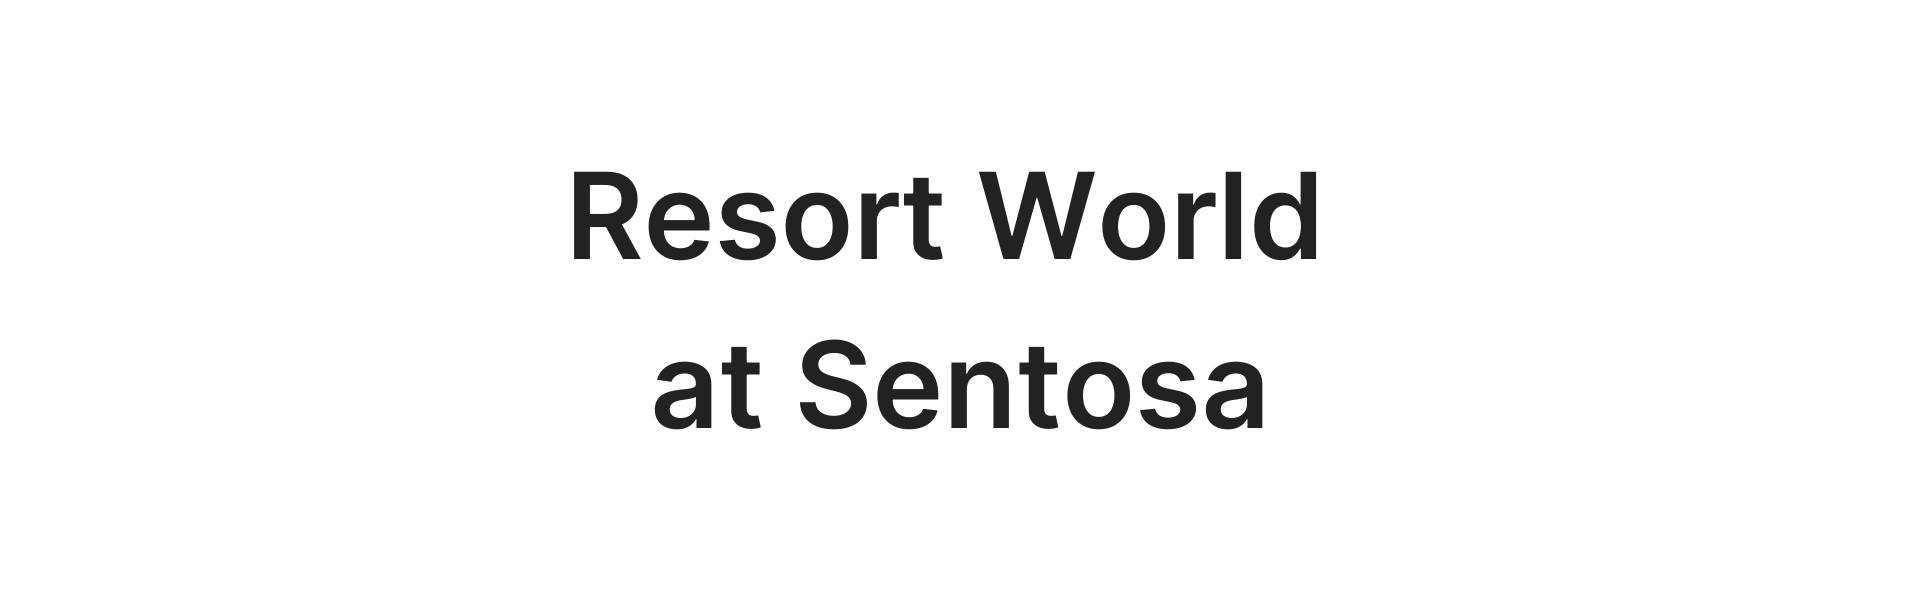 Resort World at Sentosa